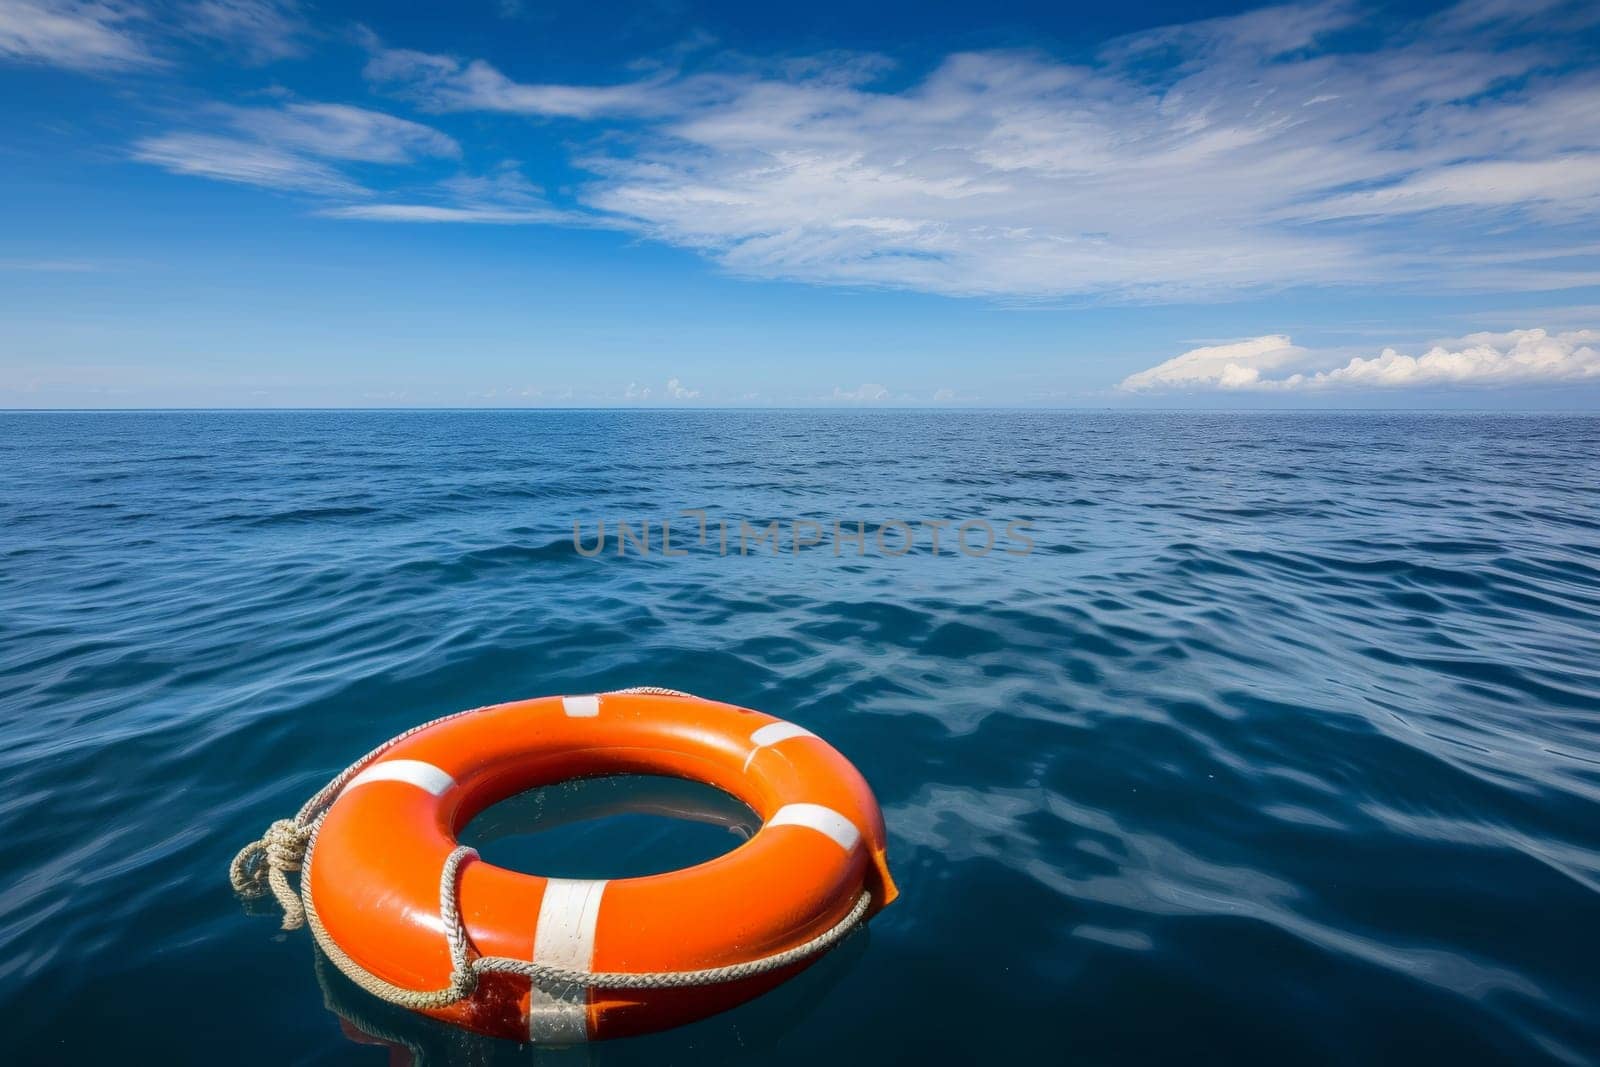 An orange lifebuoy floats on the open sea, symbolizing safety and hope under the vast sky.